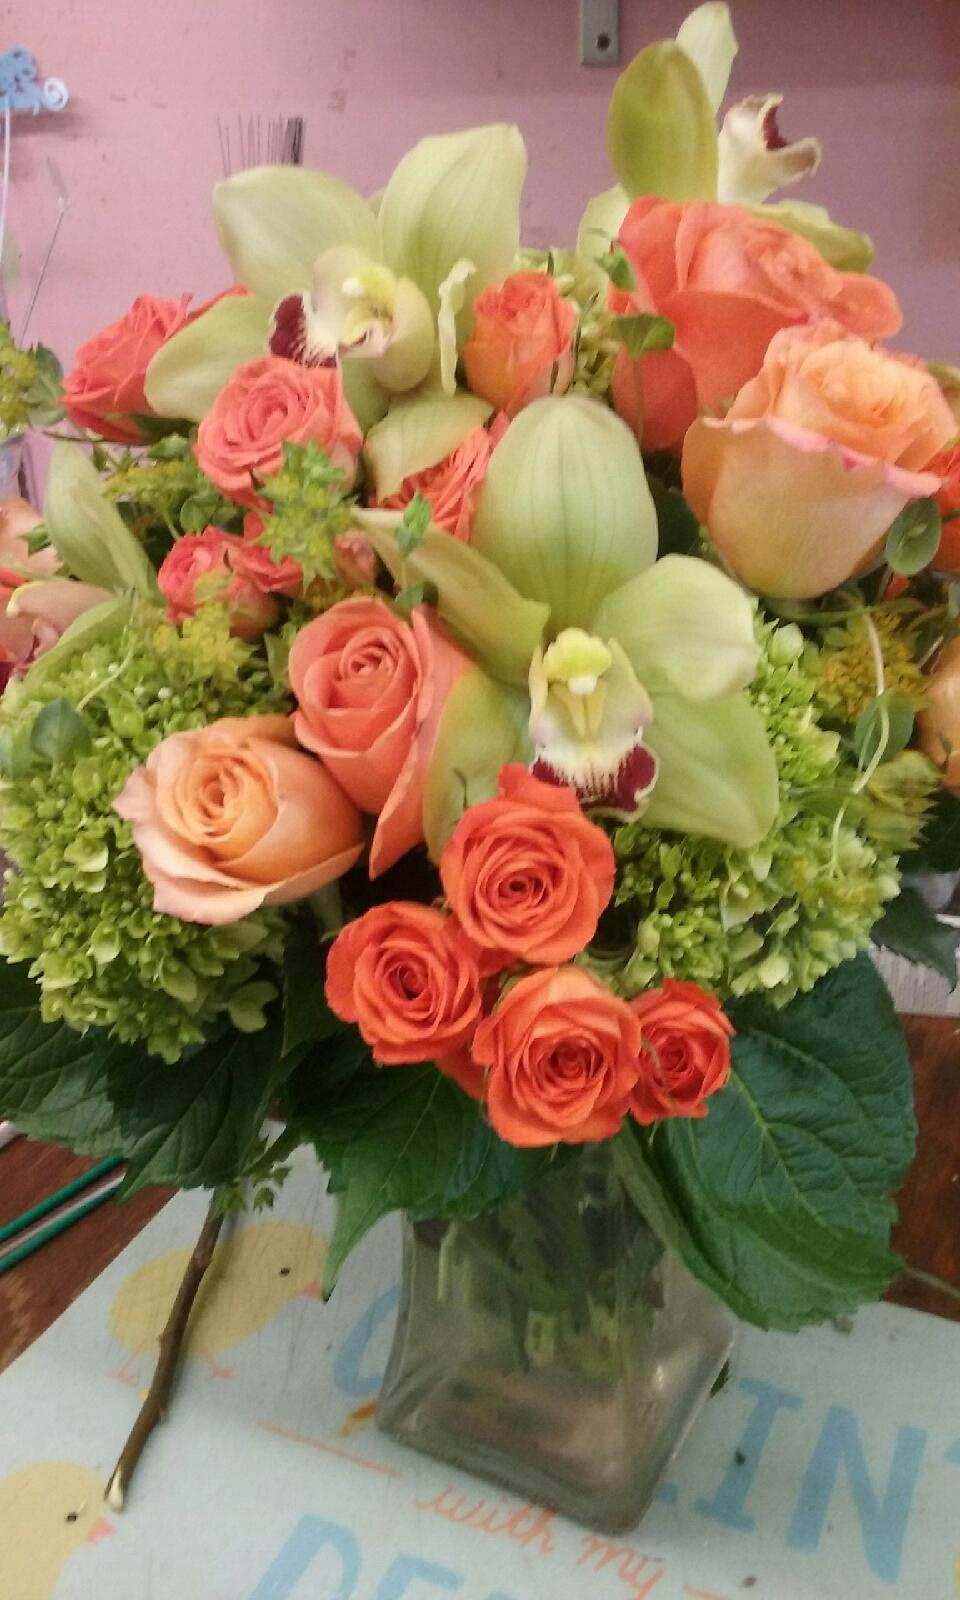 Maureens Flowers | 3826 Morrell Ave, Philadelphia, PA 19114 | Phone: (215) 637-6370